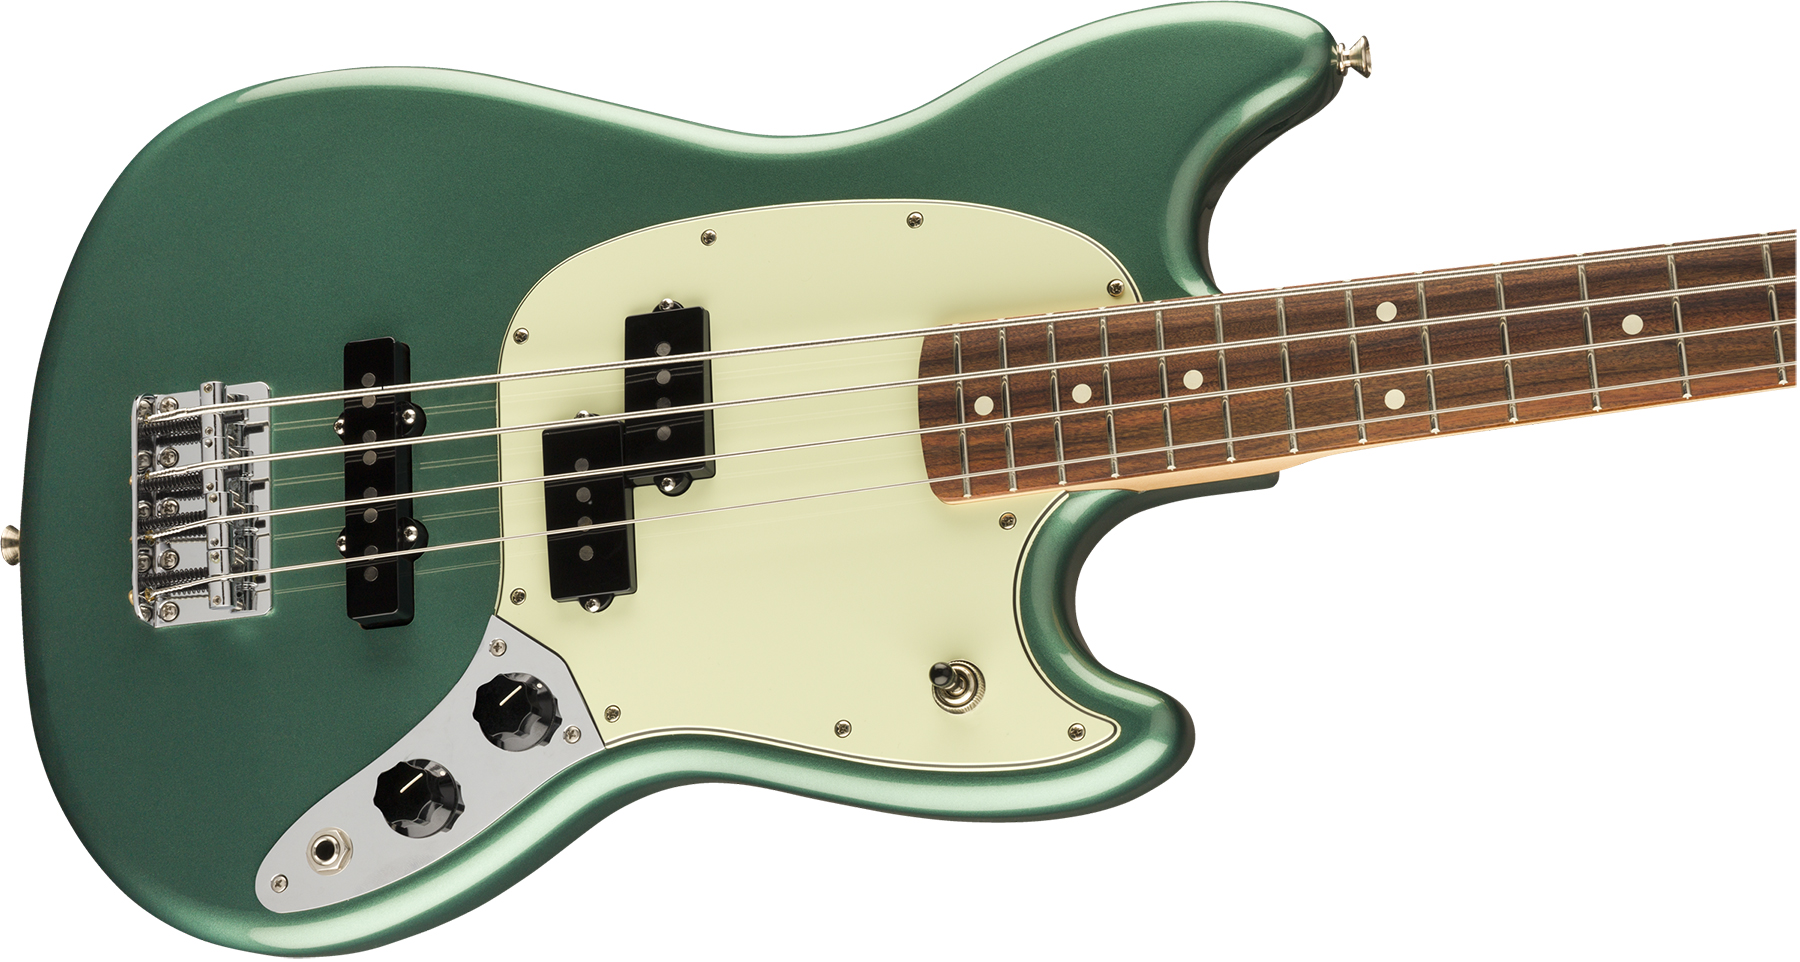 Fender Mustang Bass Pj Player Ltd Mex Pf - Sherwood Green Metallic - Electric bass for kids - Variation 2